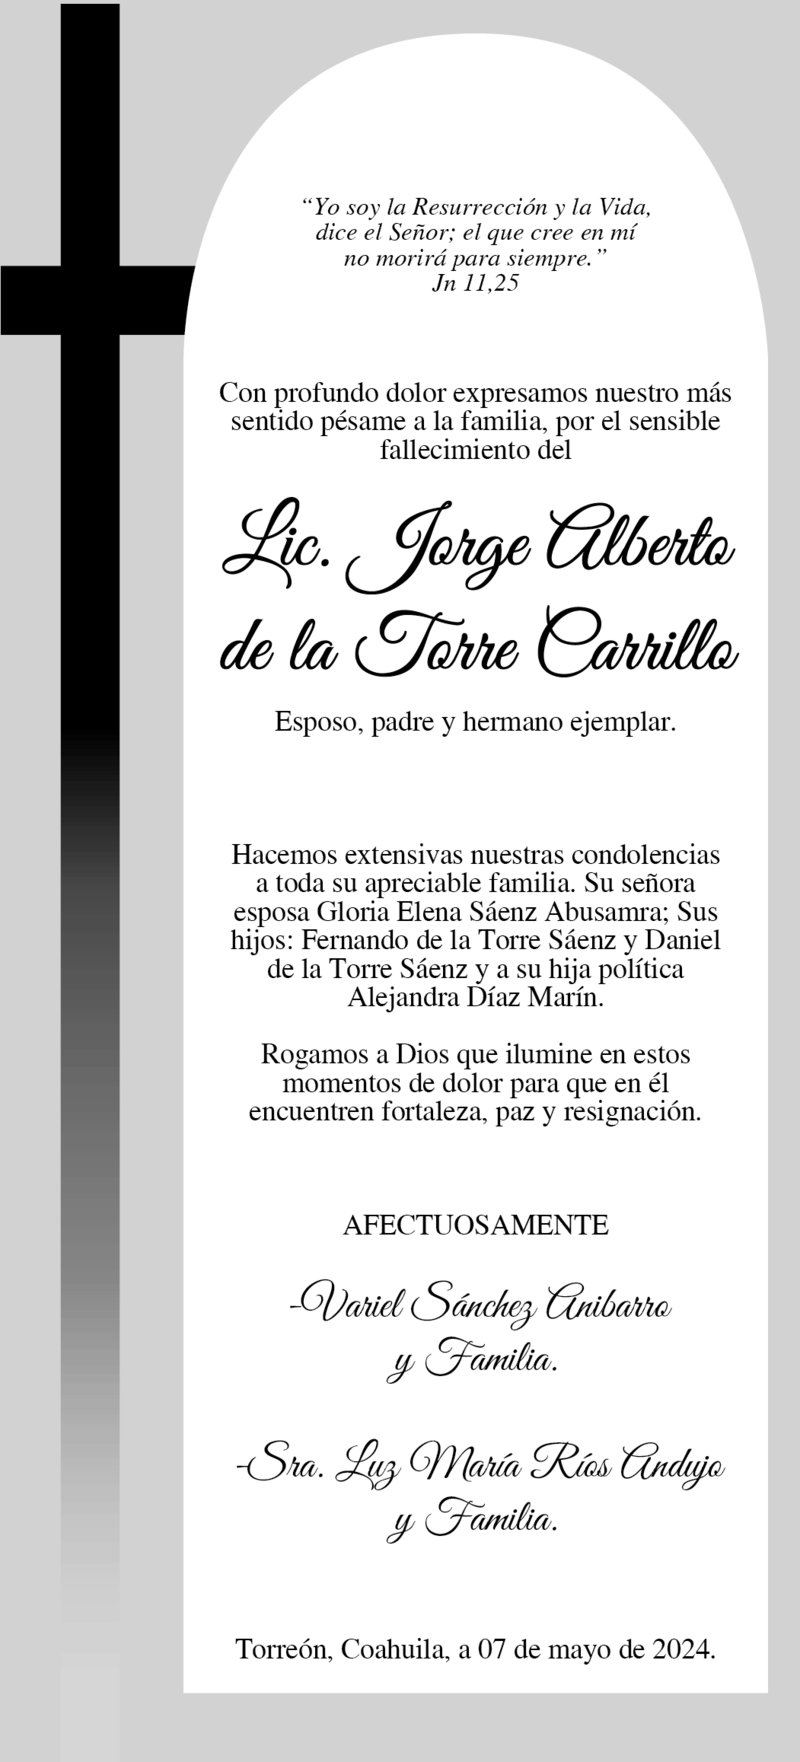 CONDOLENCIA LIC. JORGE ALBERTO DE LA TORRE CARRILLO